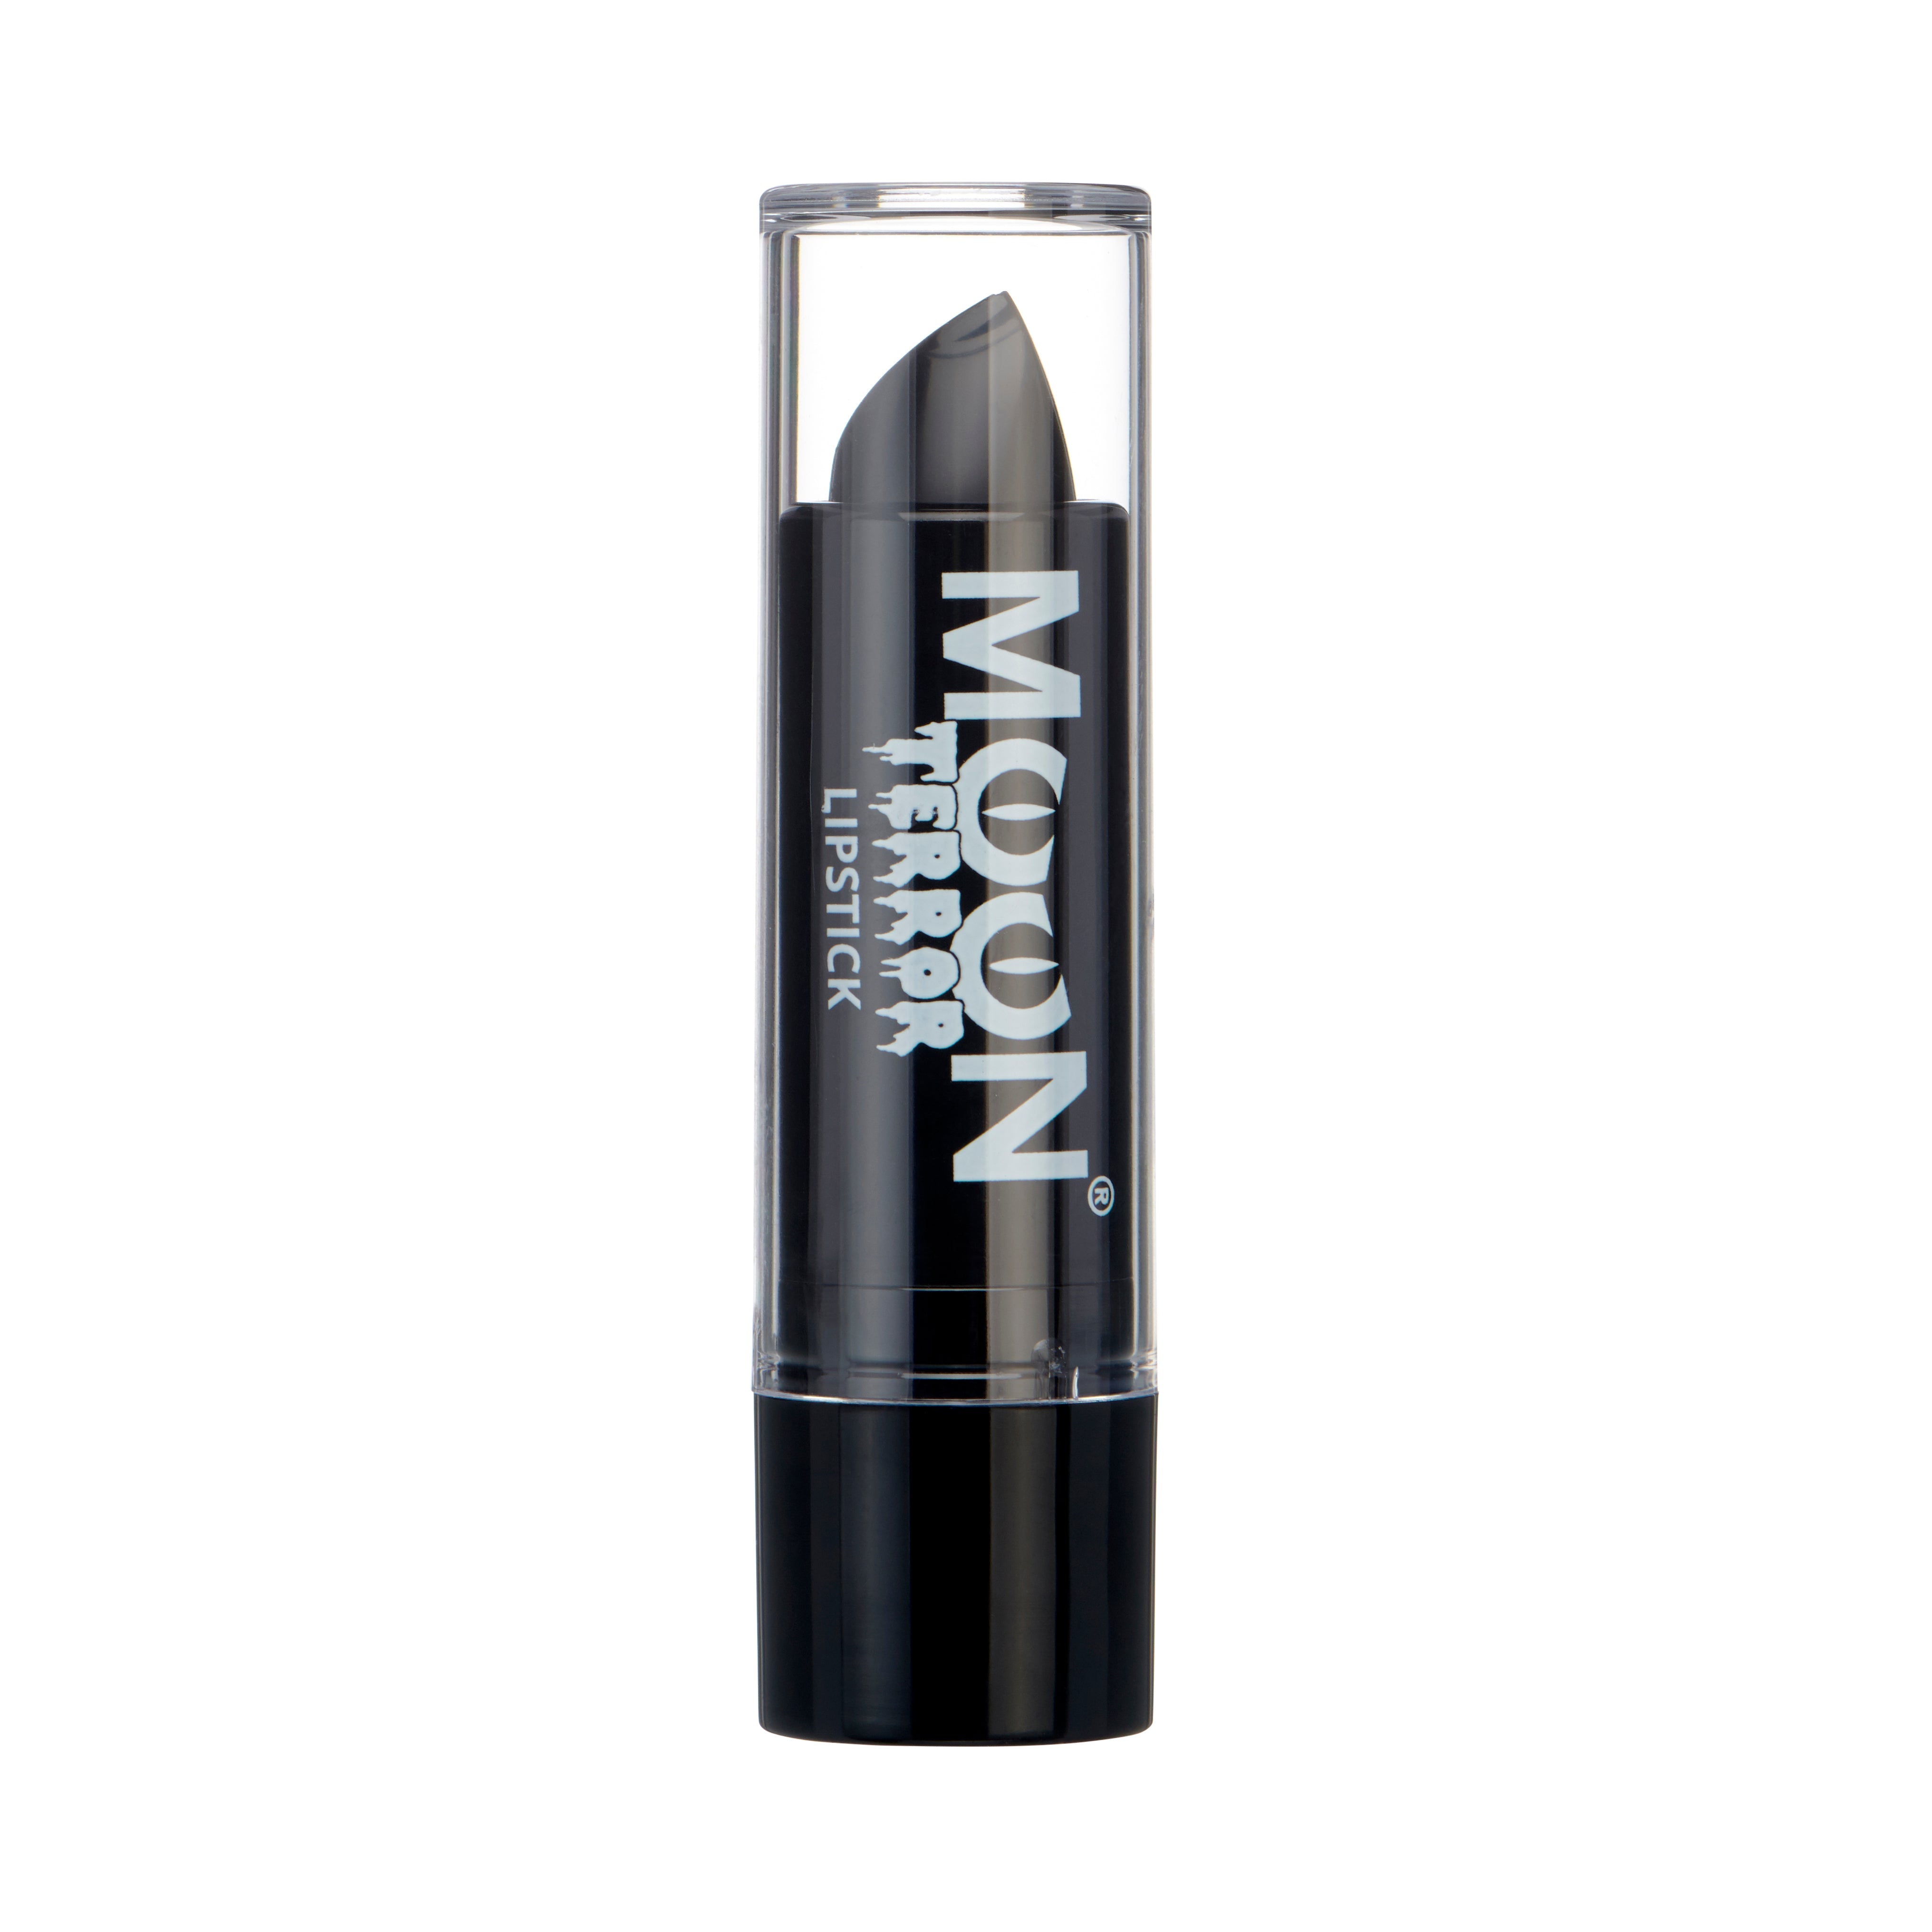 Midnight Black - Terror Lipstick, 5g. Cosmetically certified, FDA & Health Canada compliant and cruelty free.